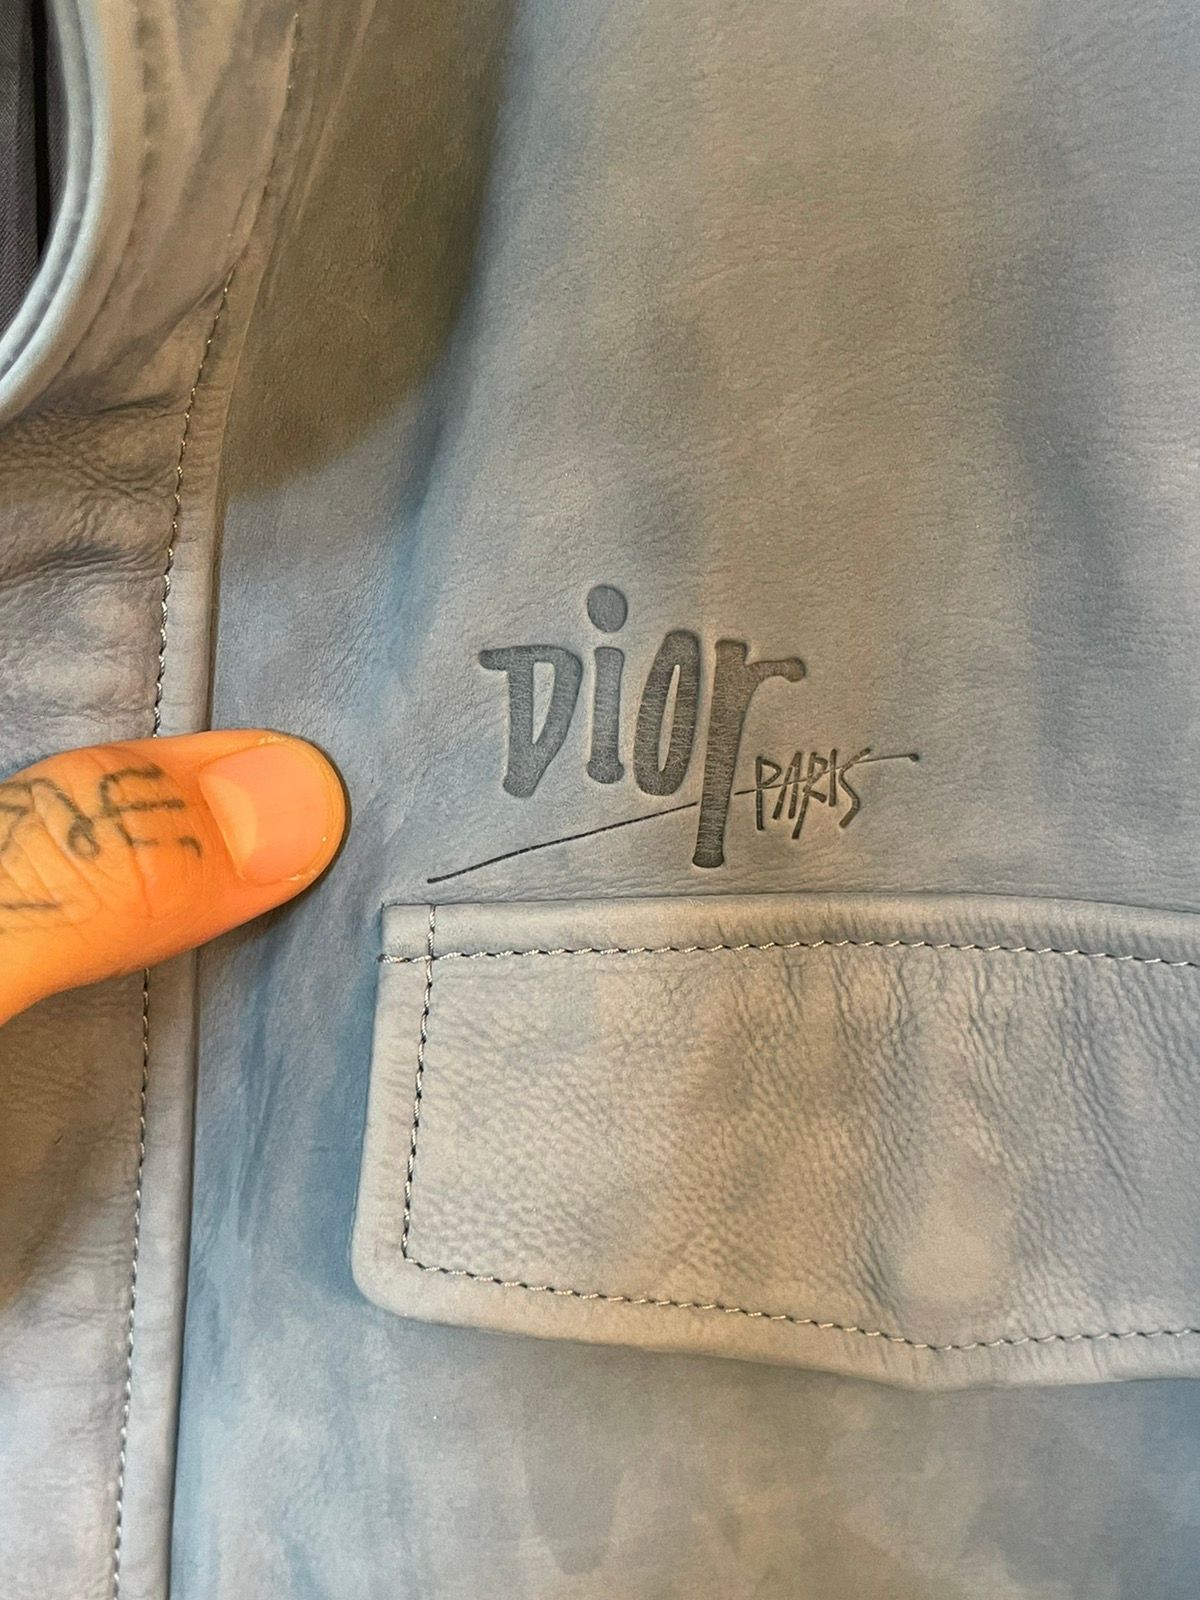 Dior x Shawn Stussy 1 of 3 NEW Baby Blue Leather Jacket SZ50